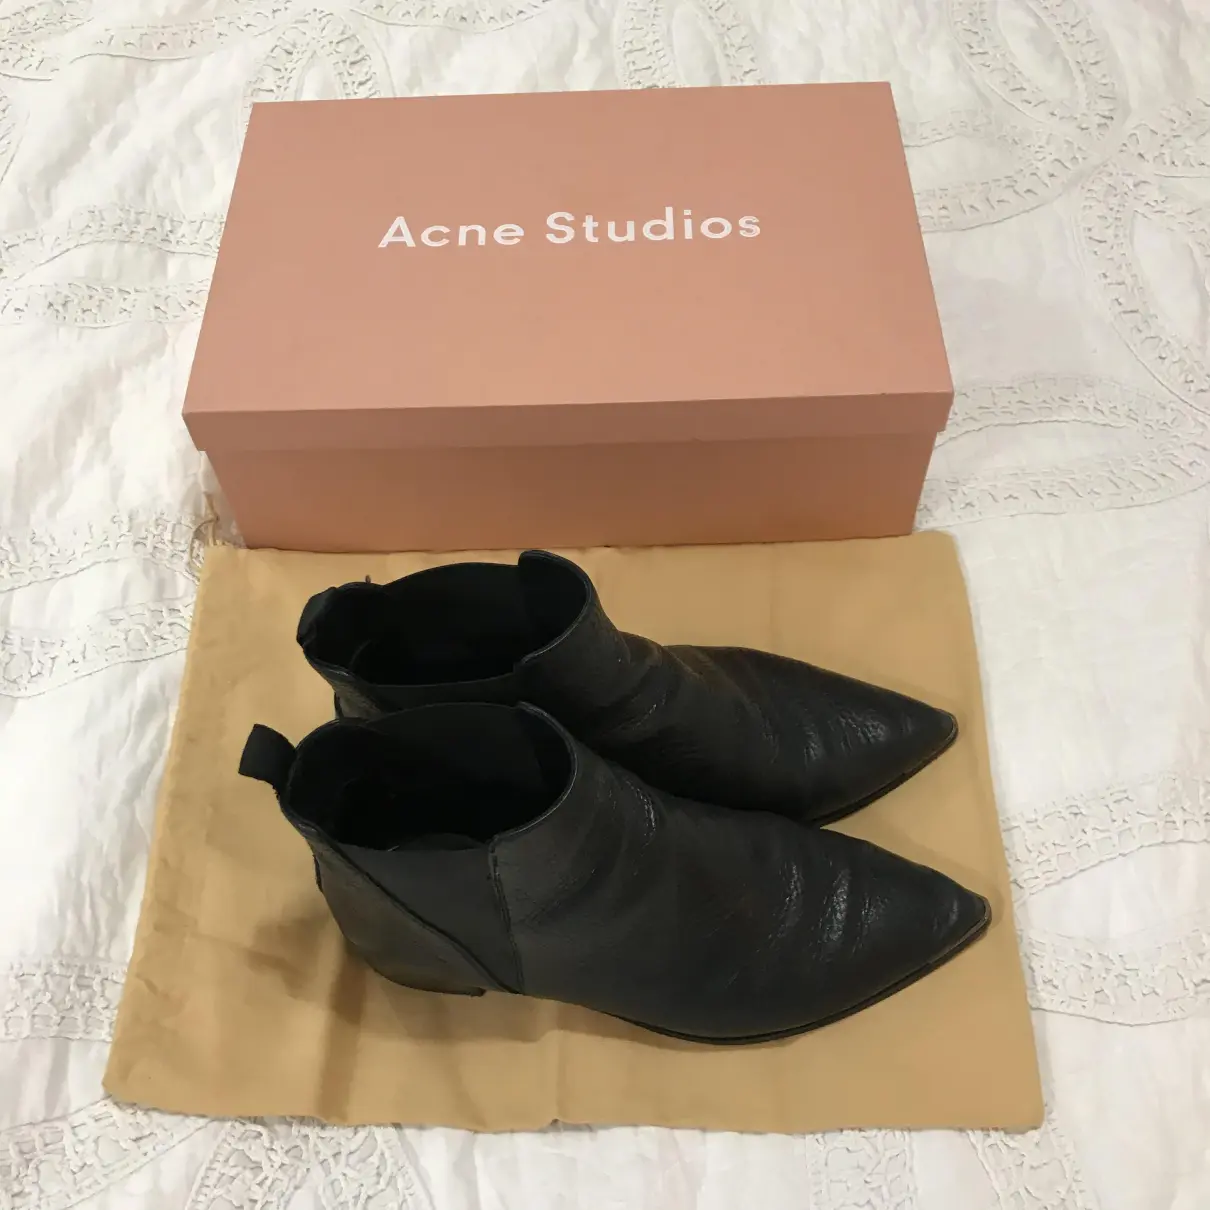 Jensen / Jenny leather ankle boots Acne Studios